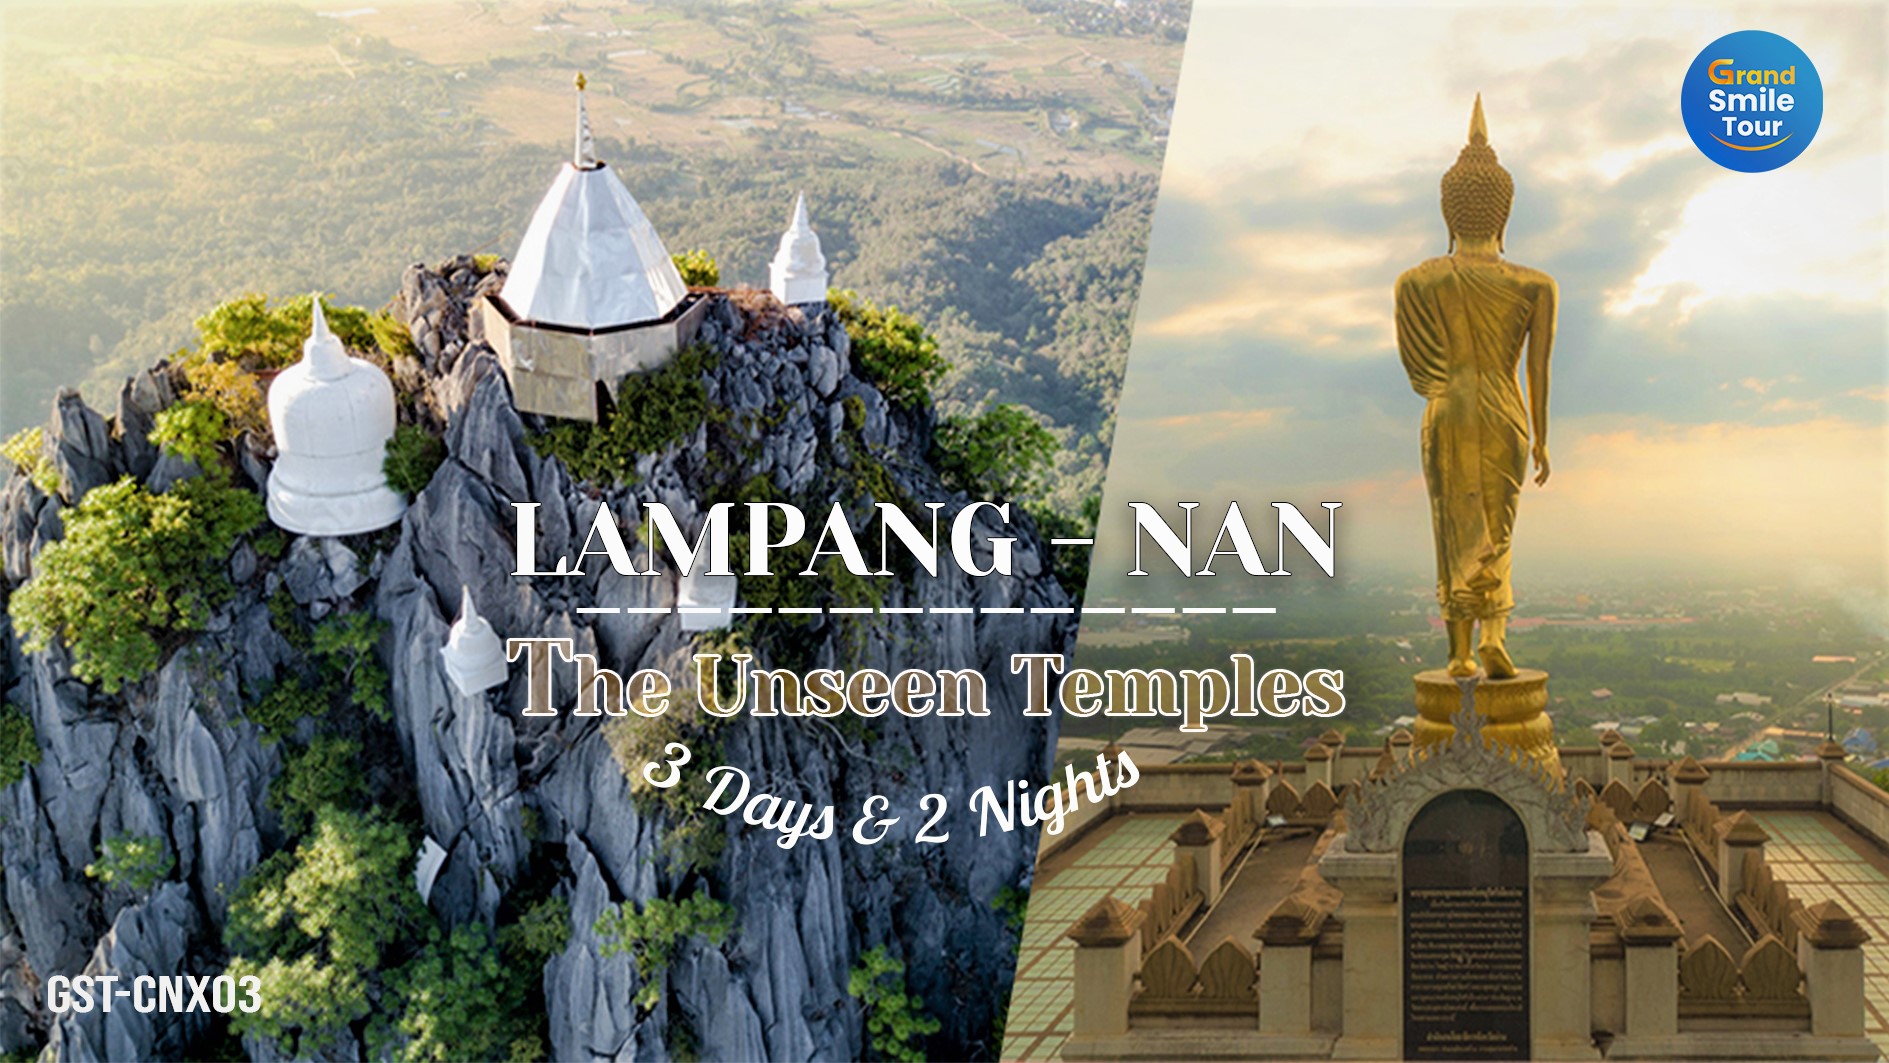 GST-CNX03 Lampang -Nan The Unseen Temples 3 Days 2 Nights